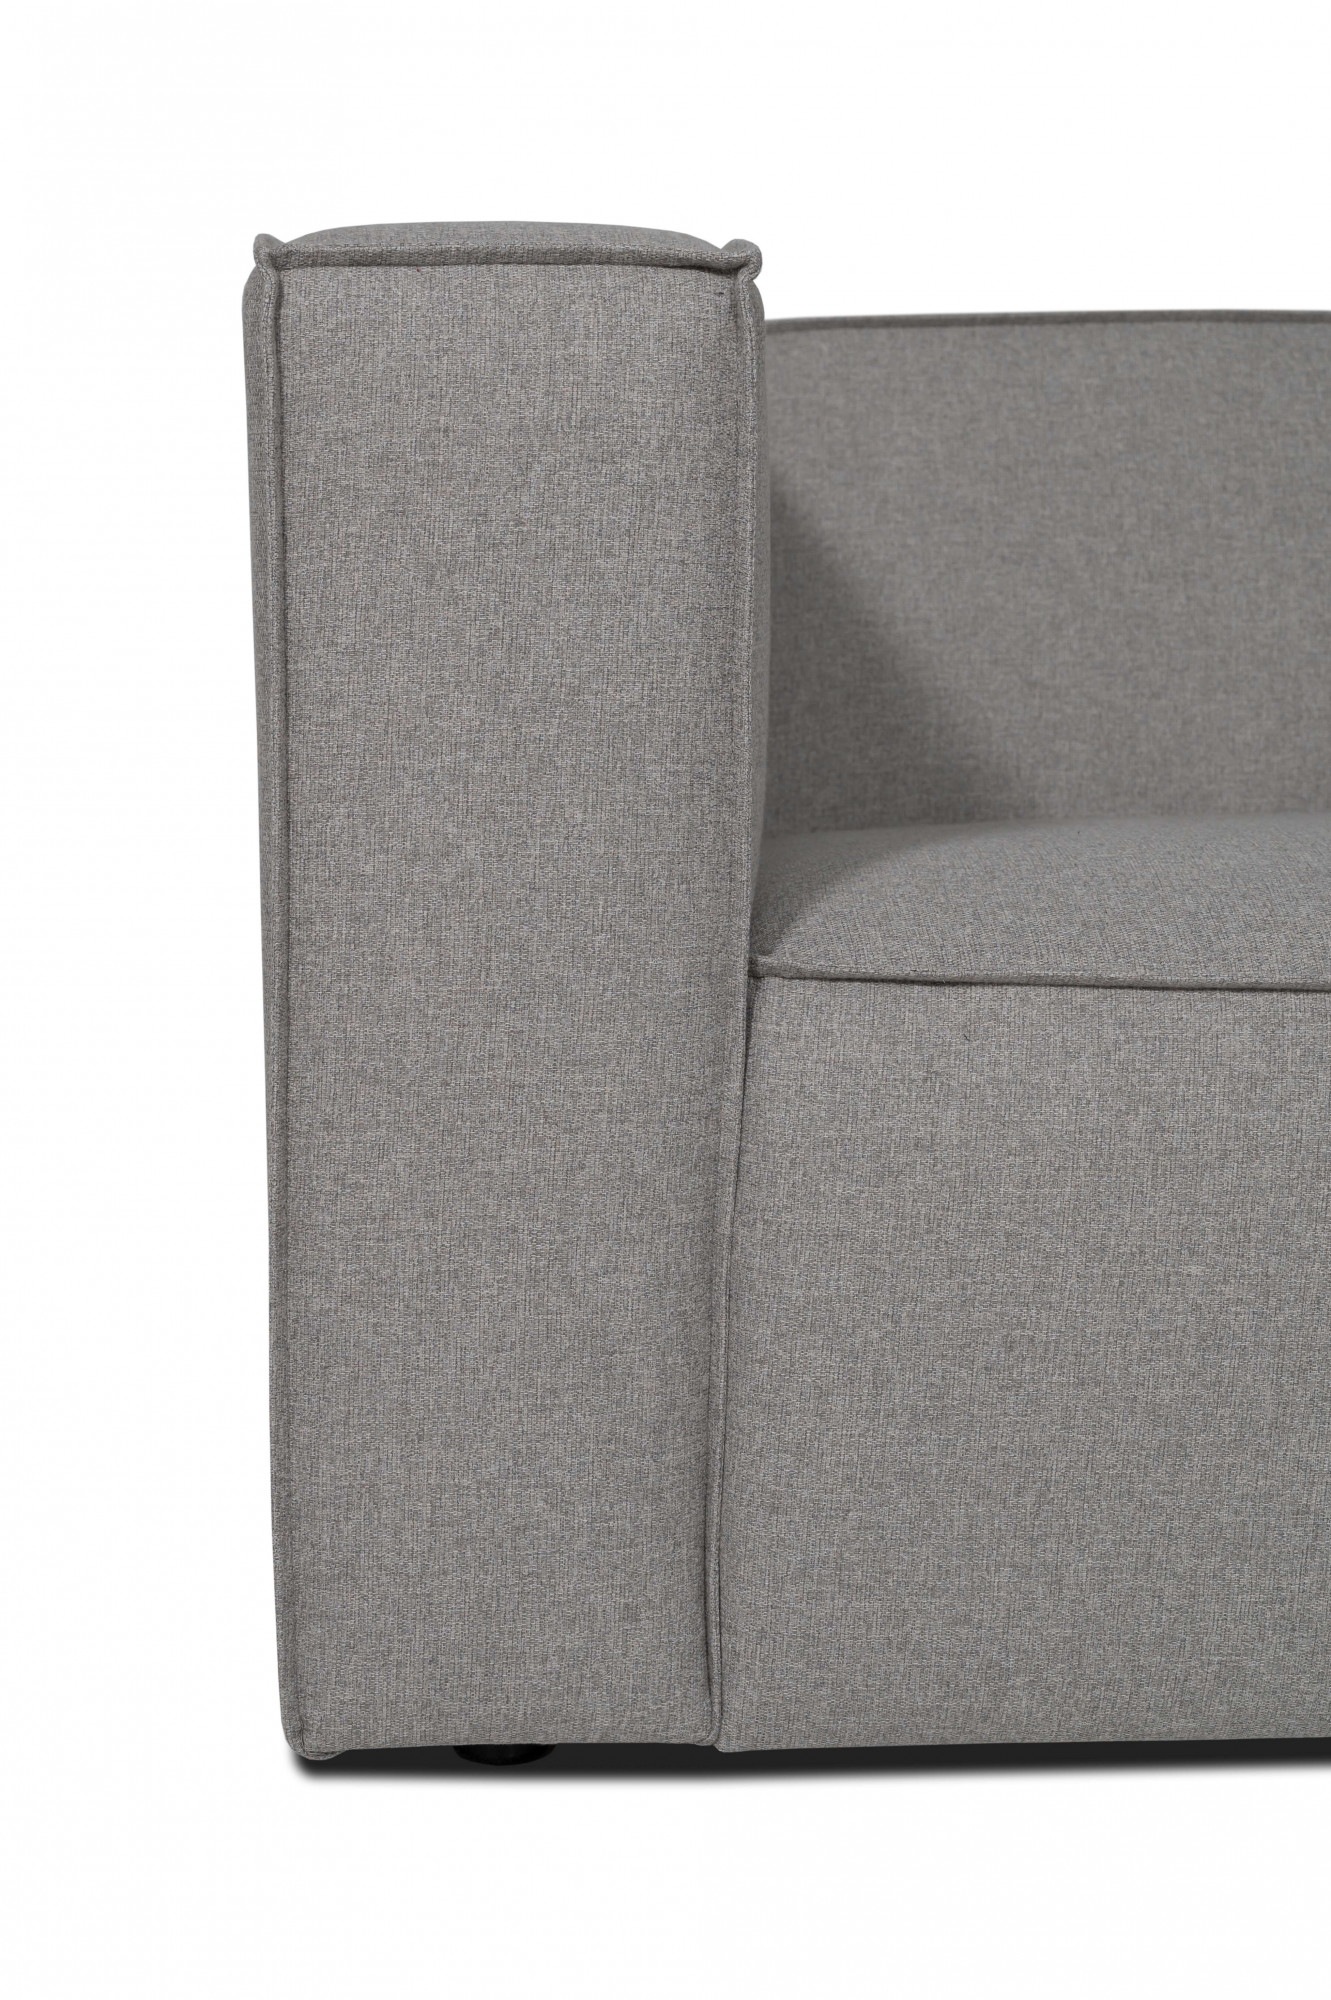 andas Ecksofa »Dalby, L-Form,«, extra tiefe Sitzfläche, mit Kedernaht, angenehmer Sitzkomfort